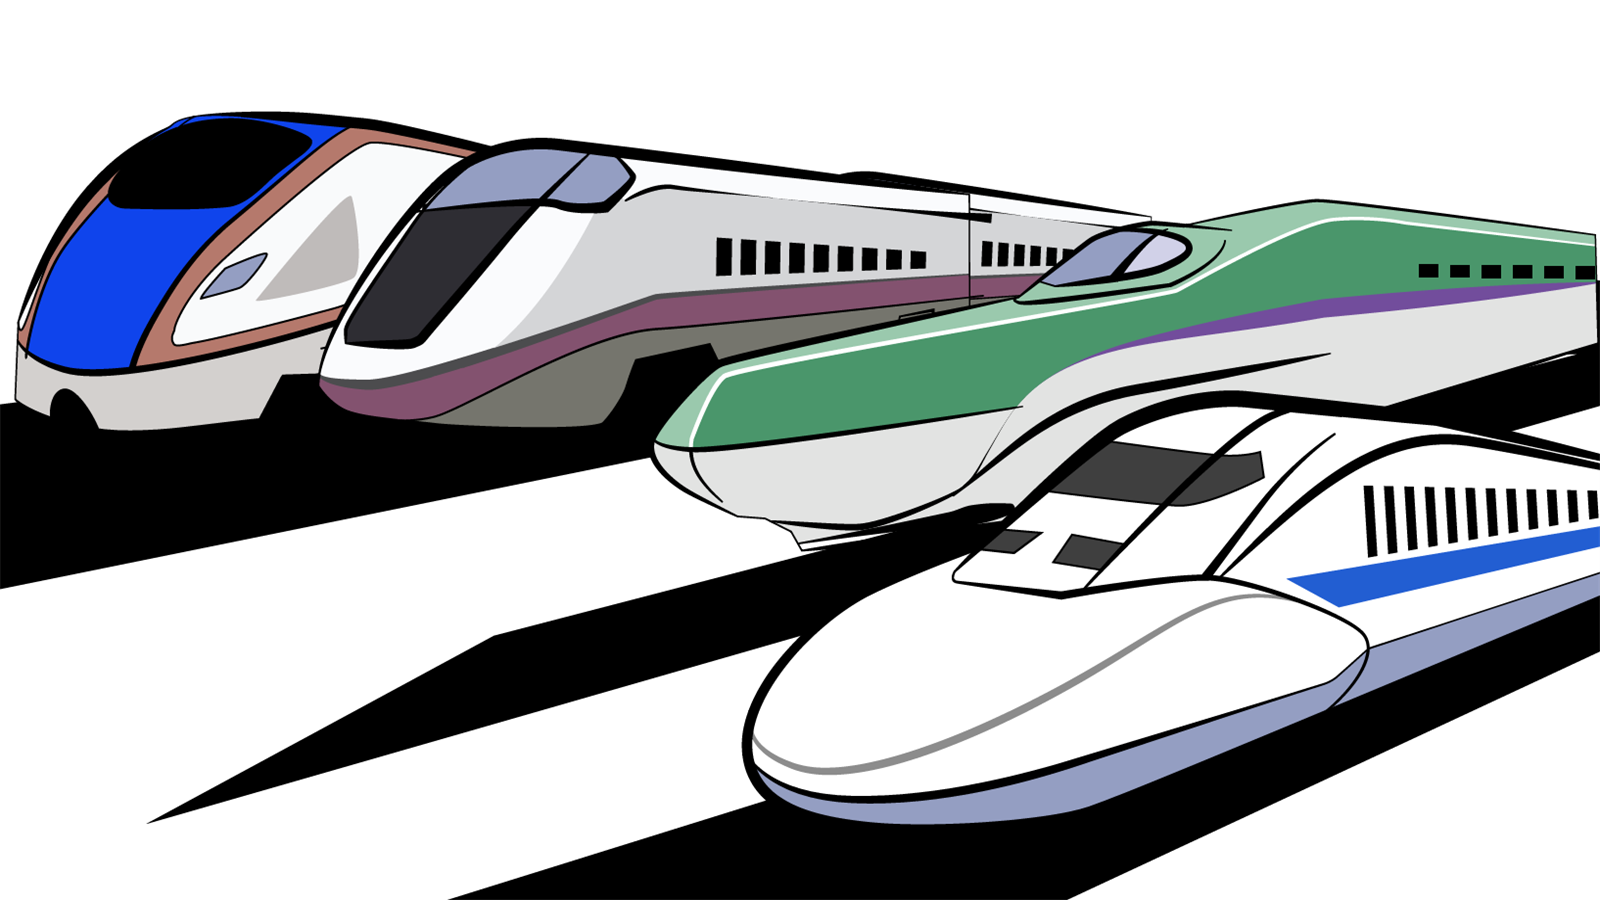 The Story Behind the Development of Shinkansen